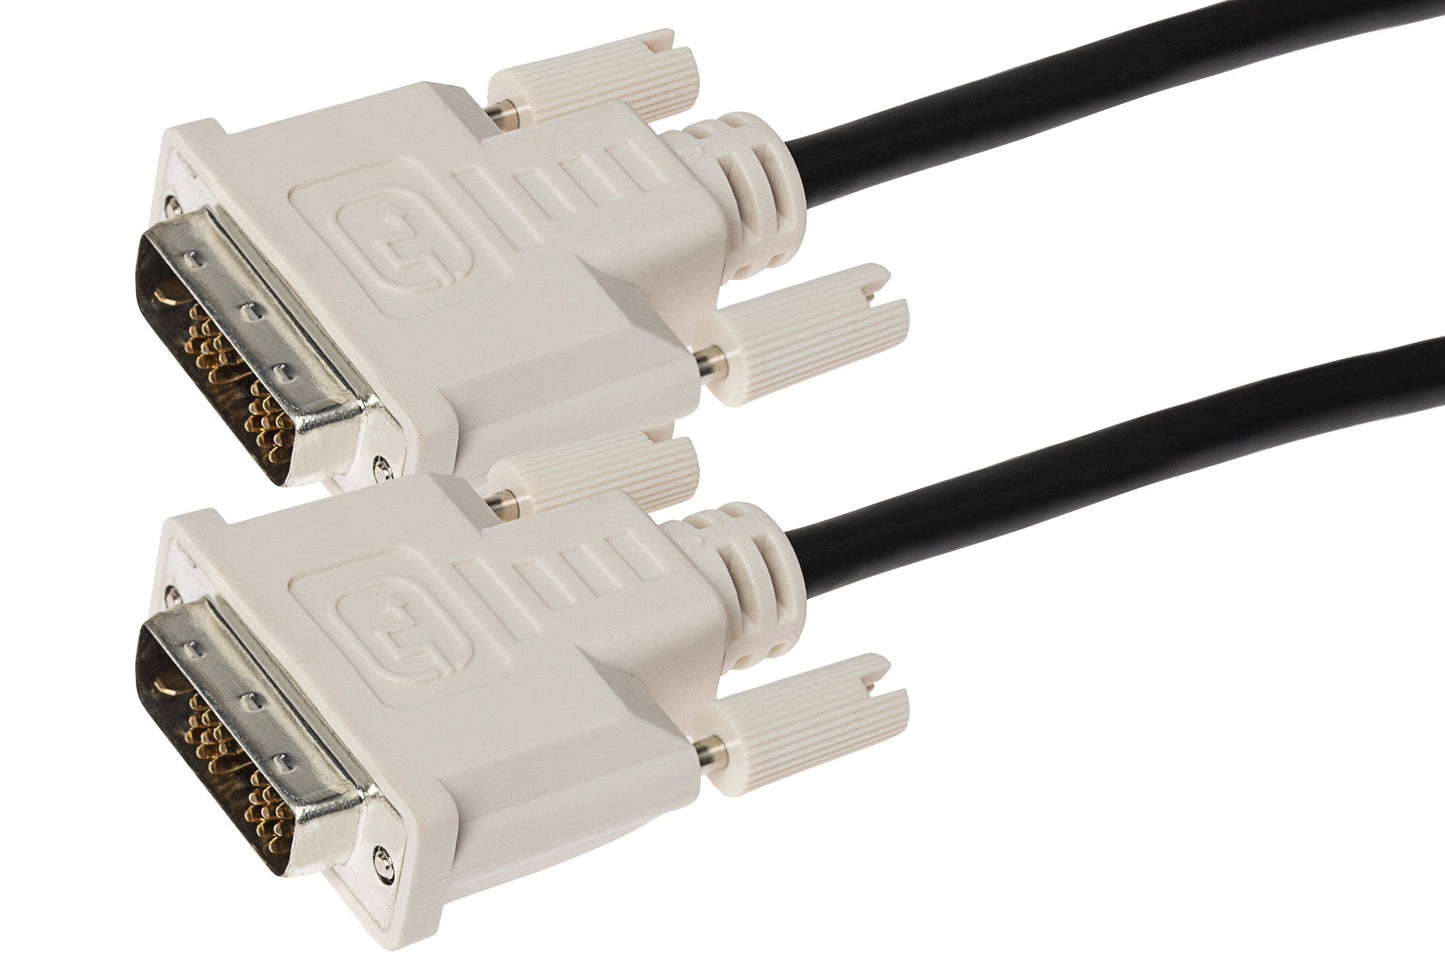 Maplin DVI-D to DVI-D 18+1 Pin Single Link Cable - White, 2m - maplin.co.uk